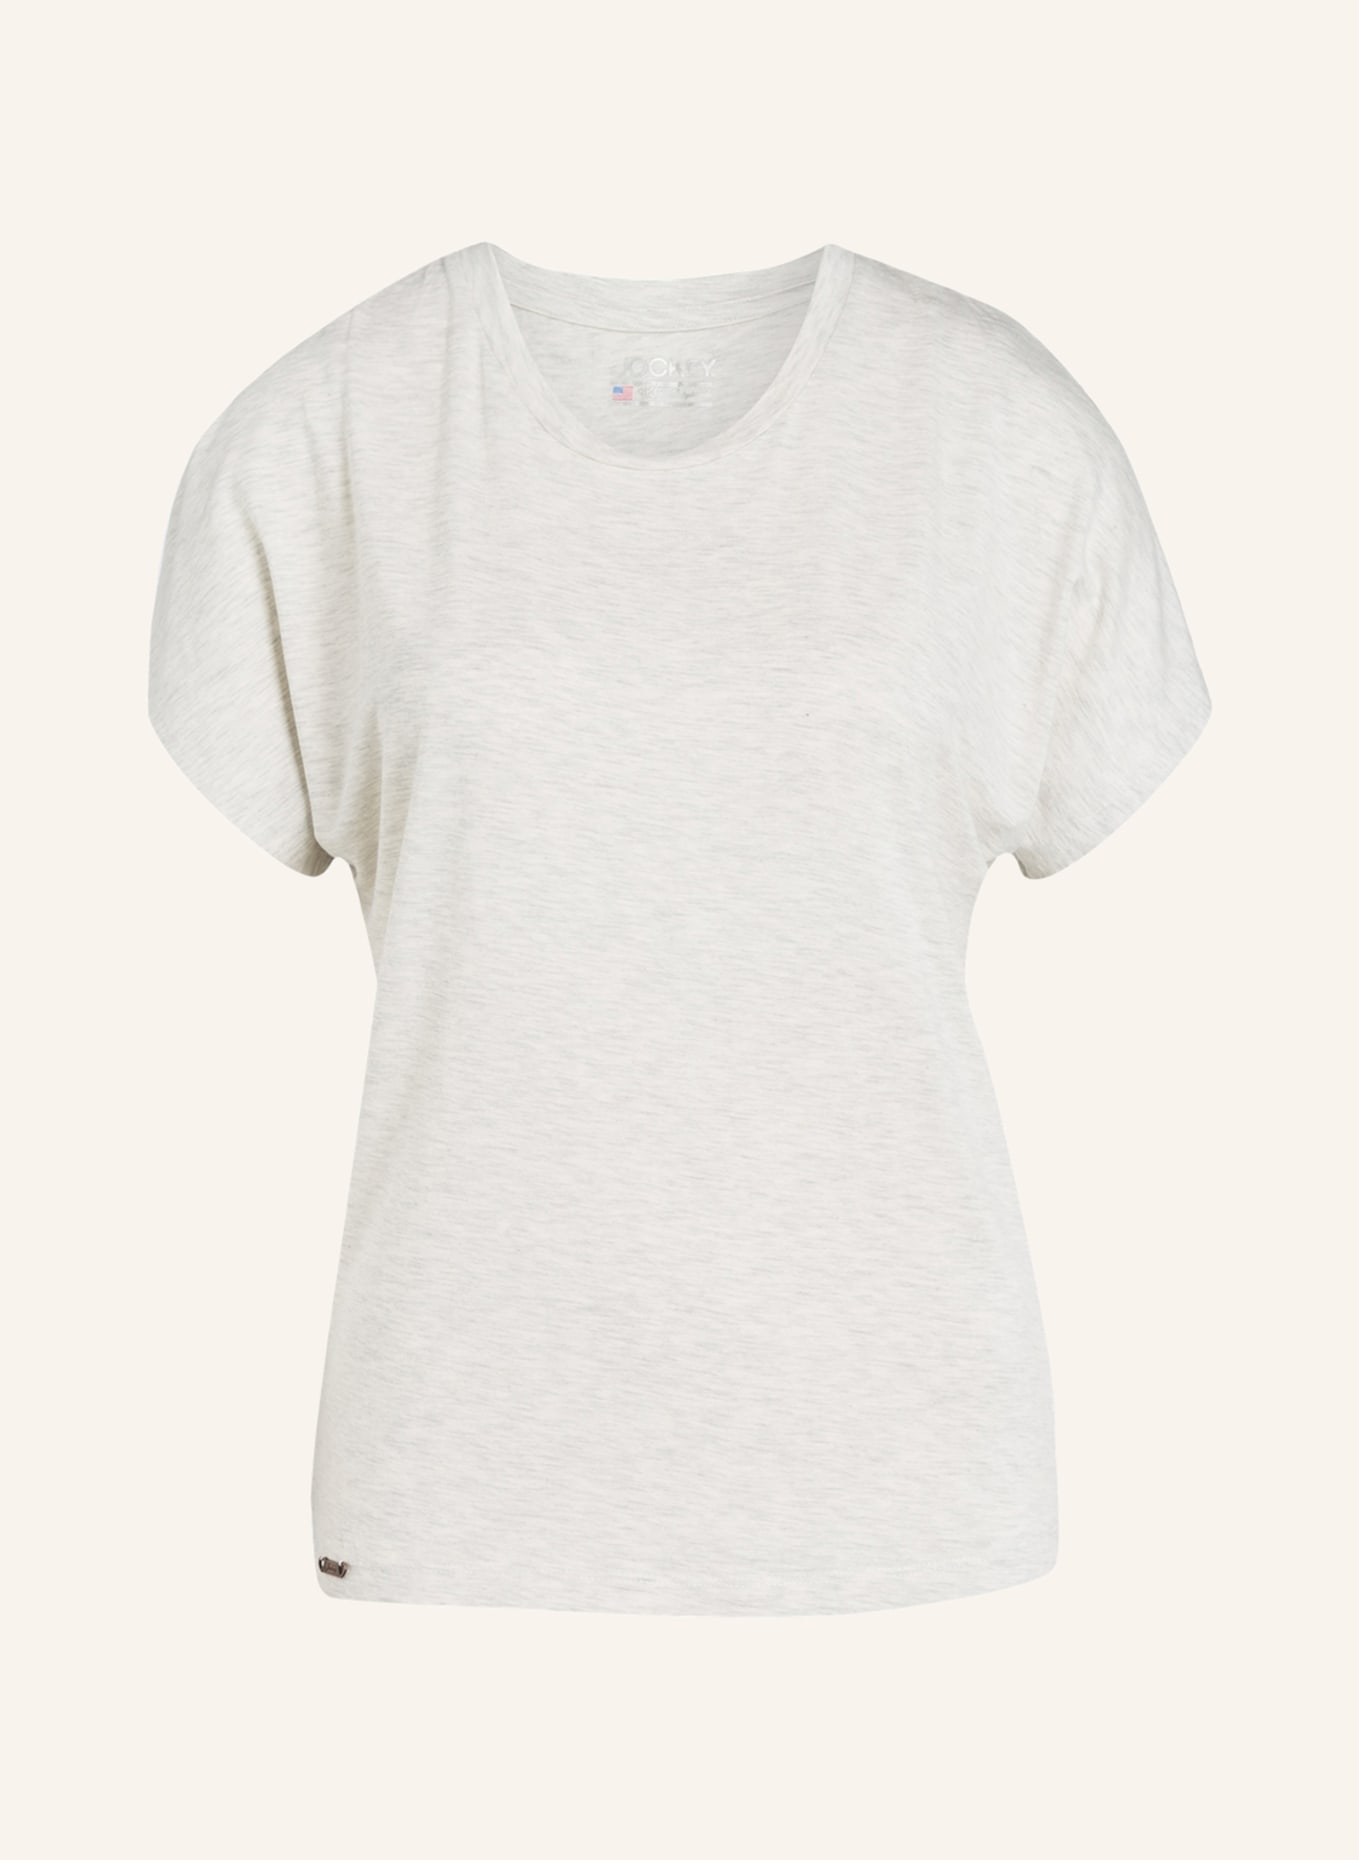 Ночная рубашка JOCKEY SchlafSUPERSOFT LOUNGE, светло-серый